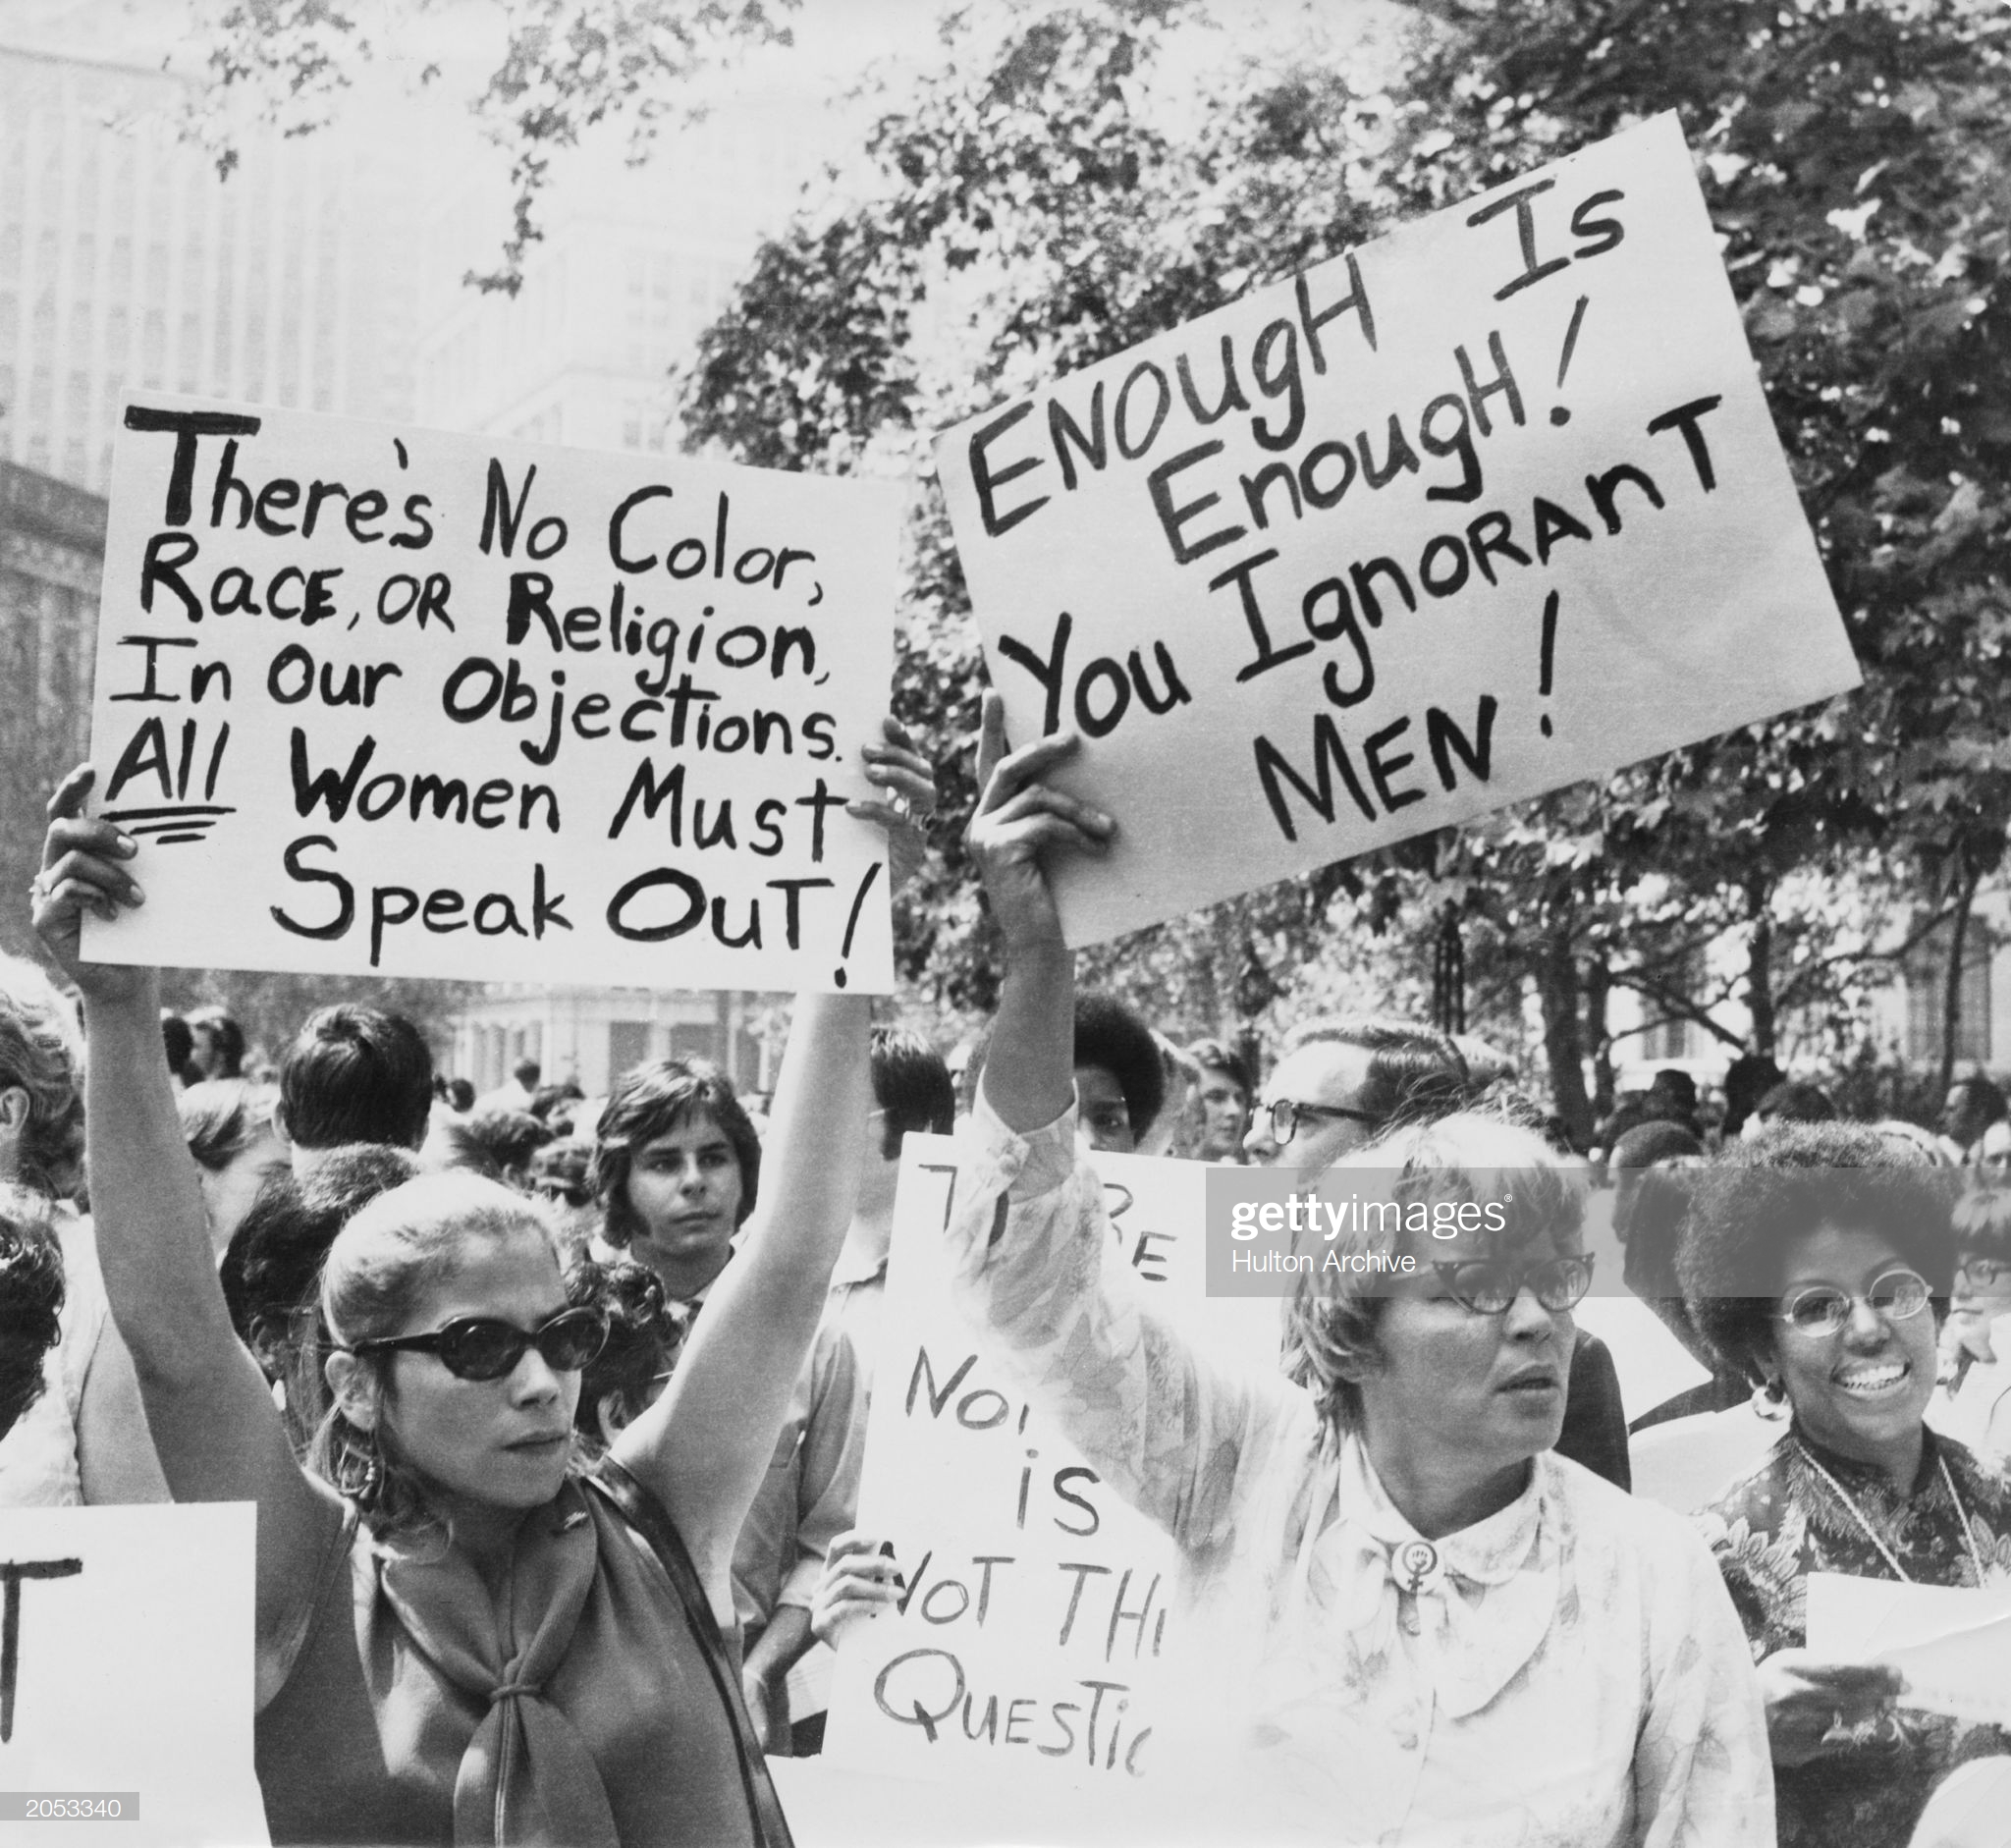 women's civil rights movement 1950s to 1960s essay pdf